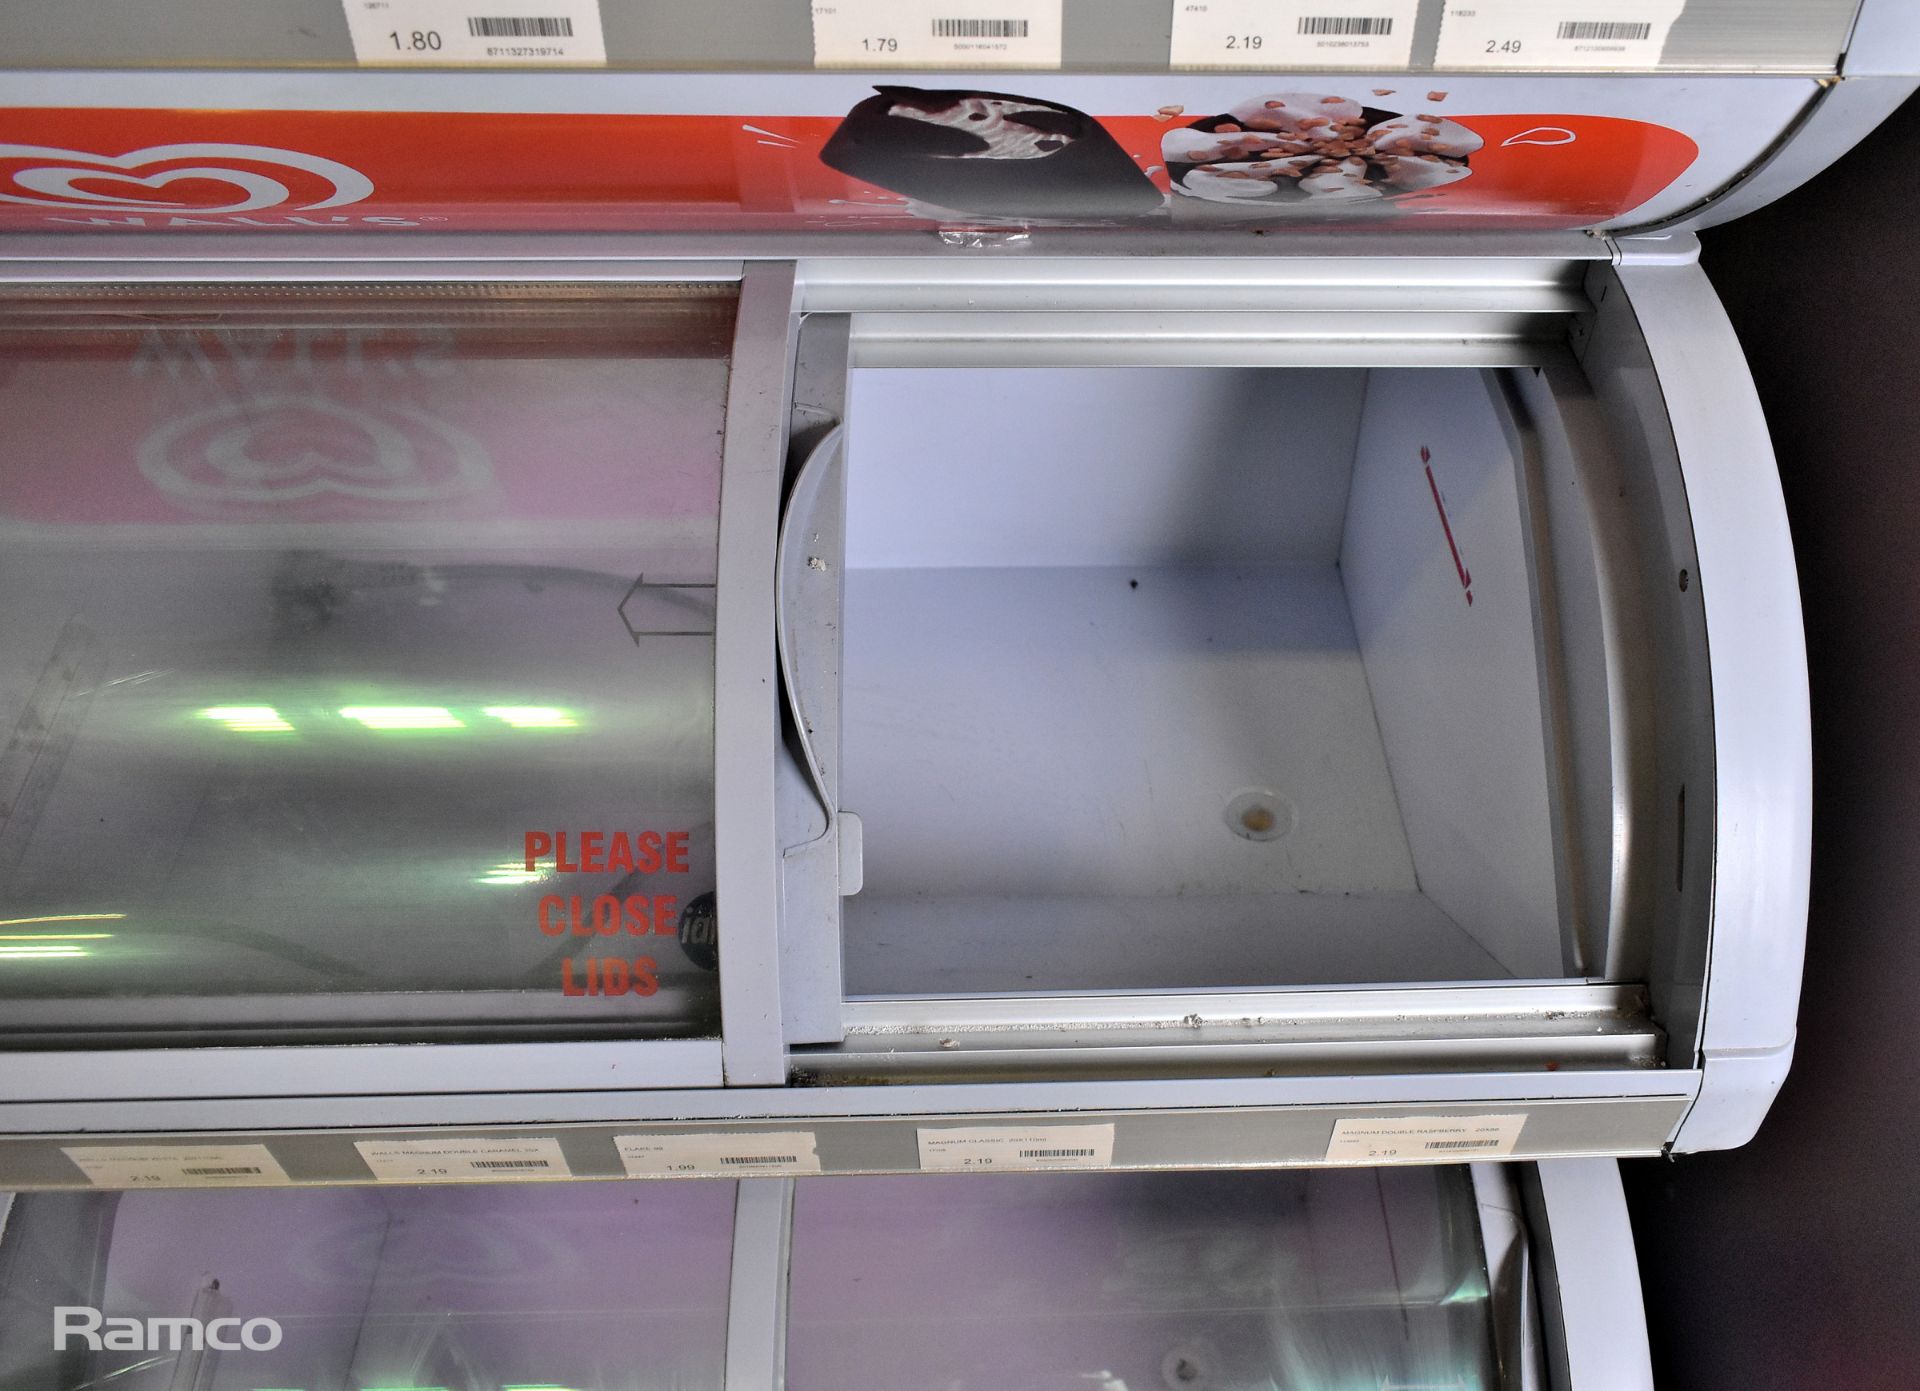 Iarp visimax slim 3 LED 3 tier Ice cream display freezer, 240V 50Hz - L 80 x W 85 x H 135 - Image 3 of 4